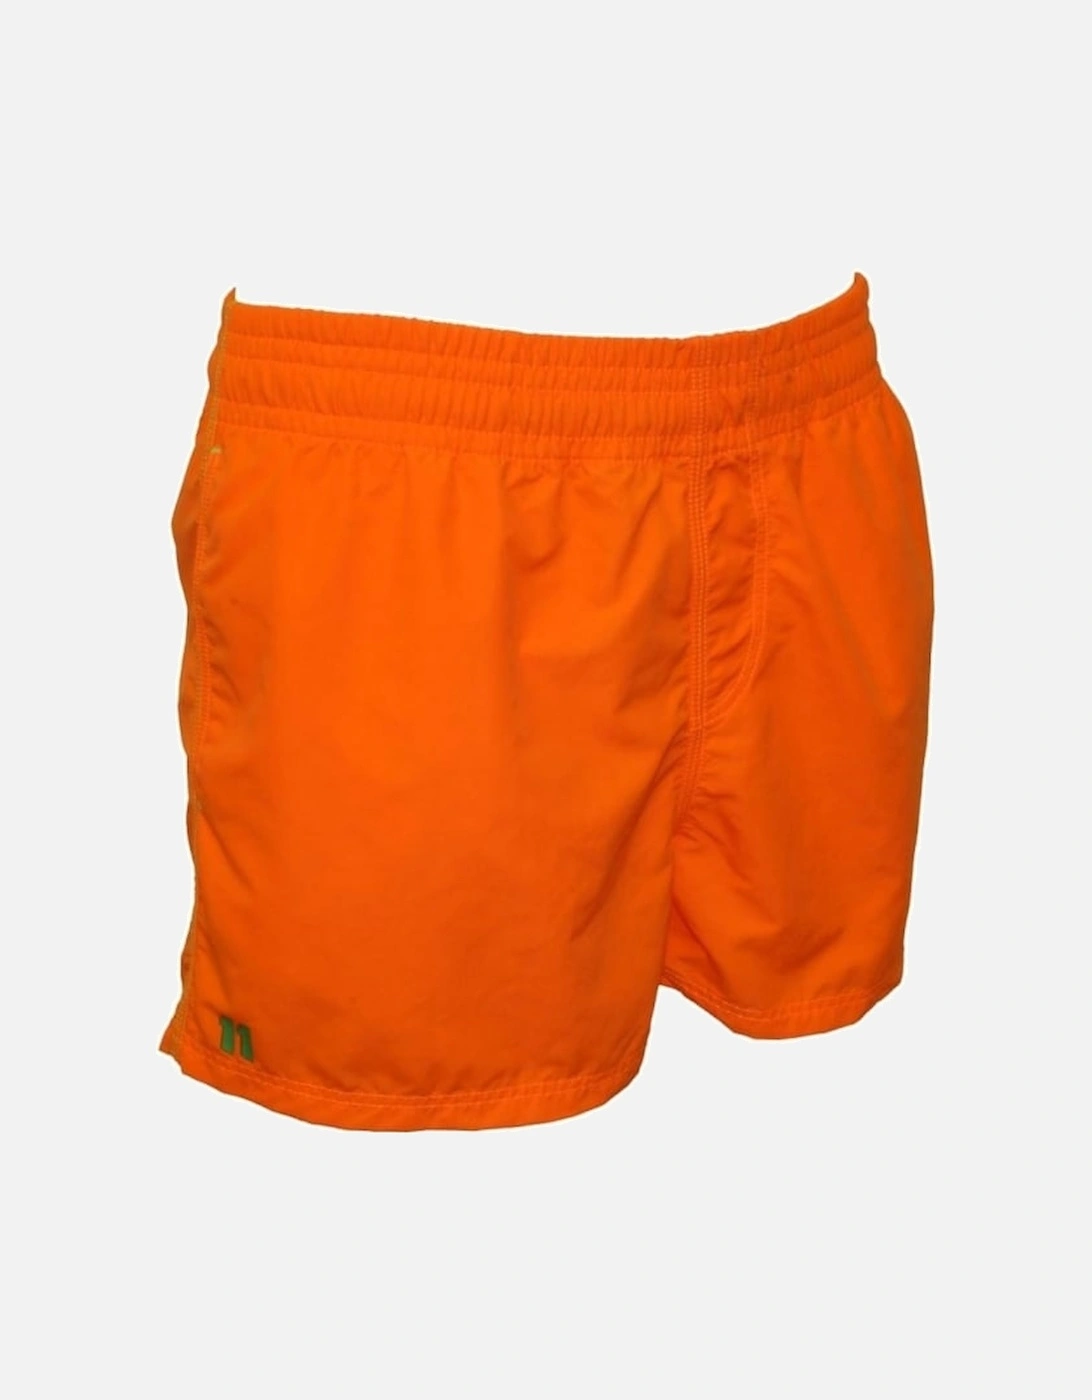 Beach Boxer Shorts, Orange